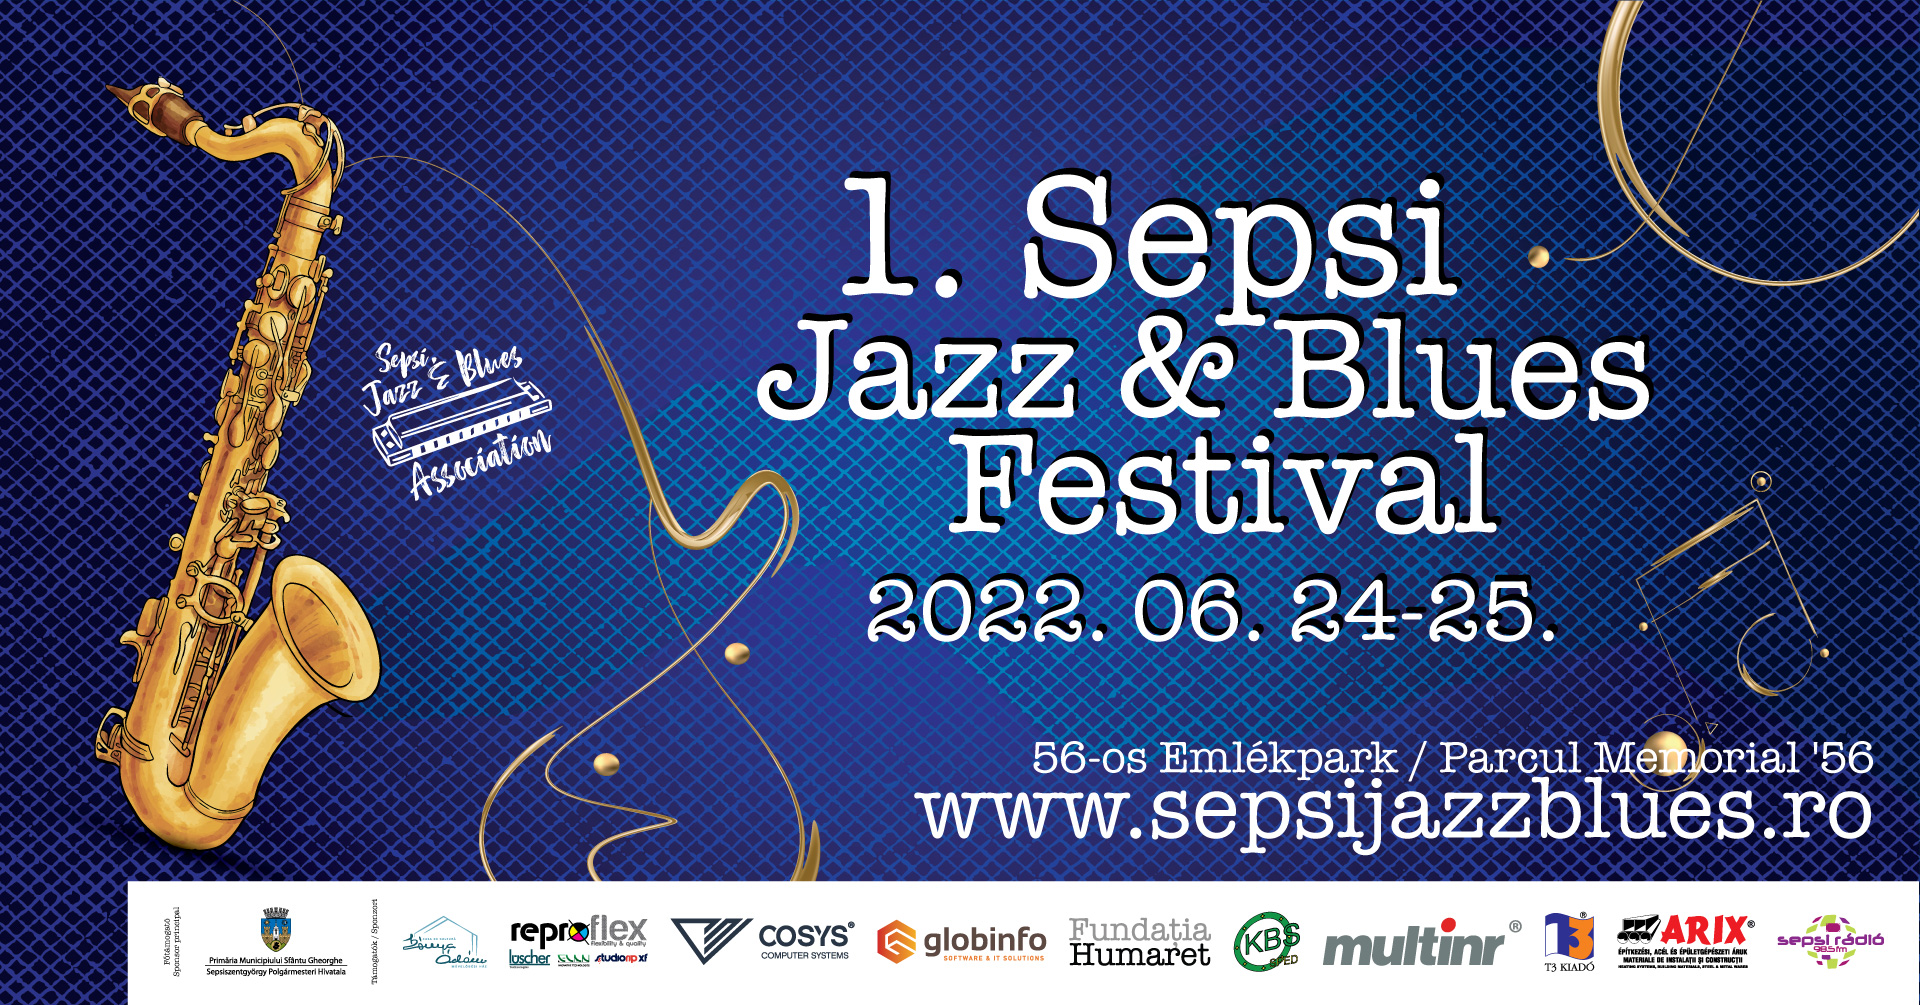 1. Sepsi Jazz & Blues Festival